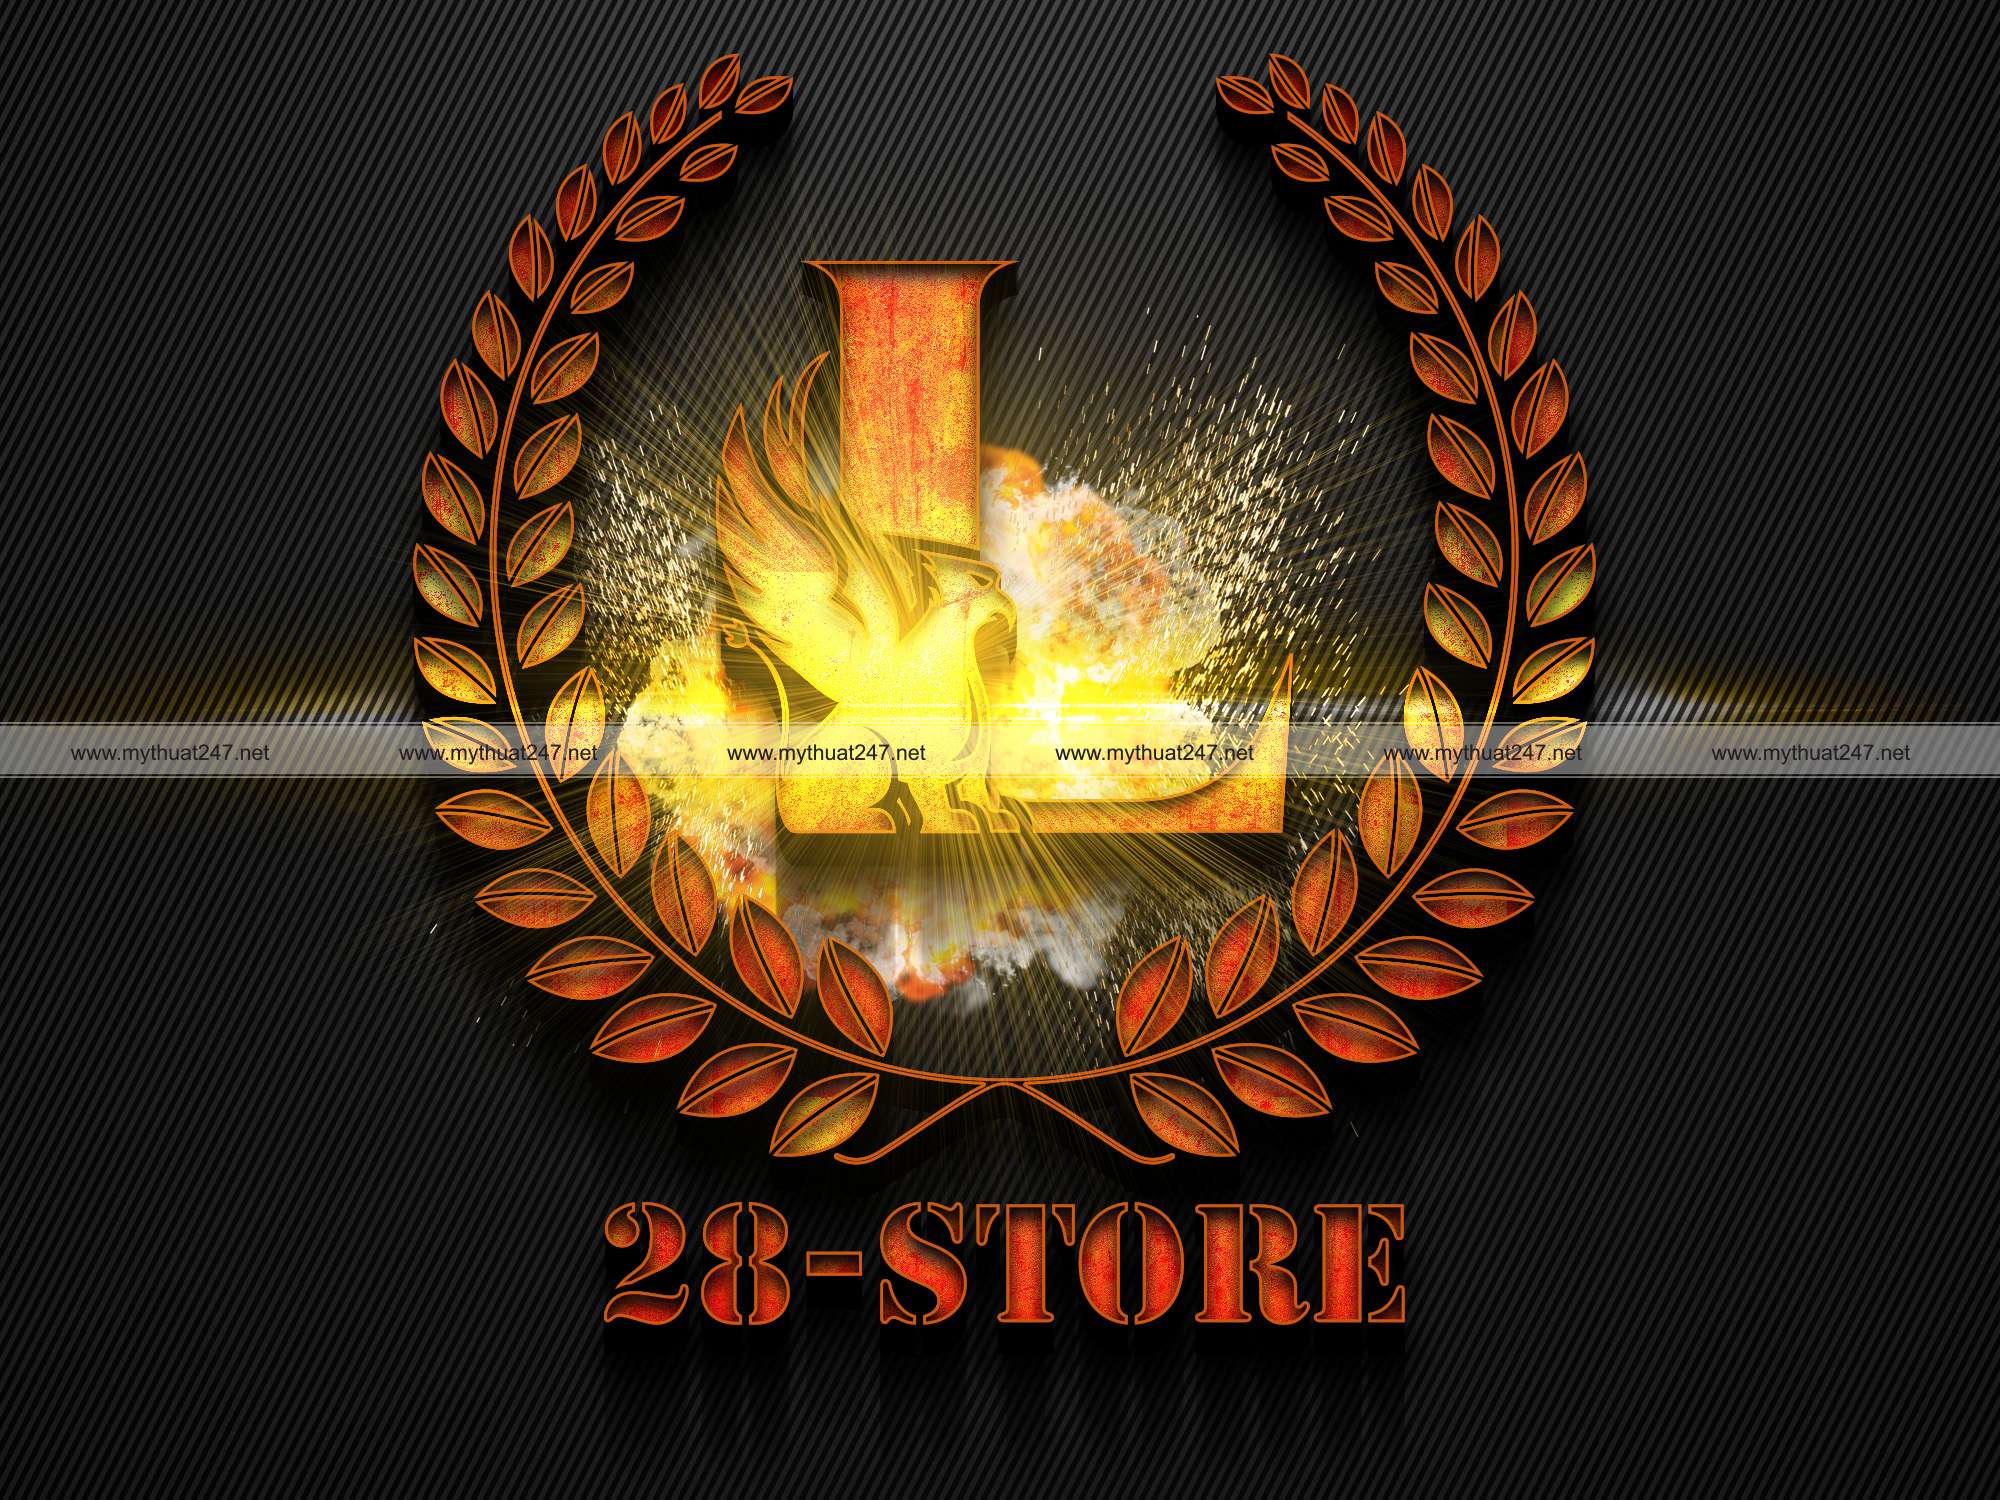 Thiết kế logo shop thời trang 28-store